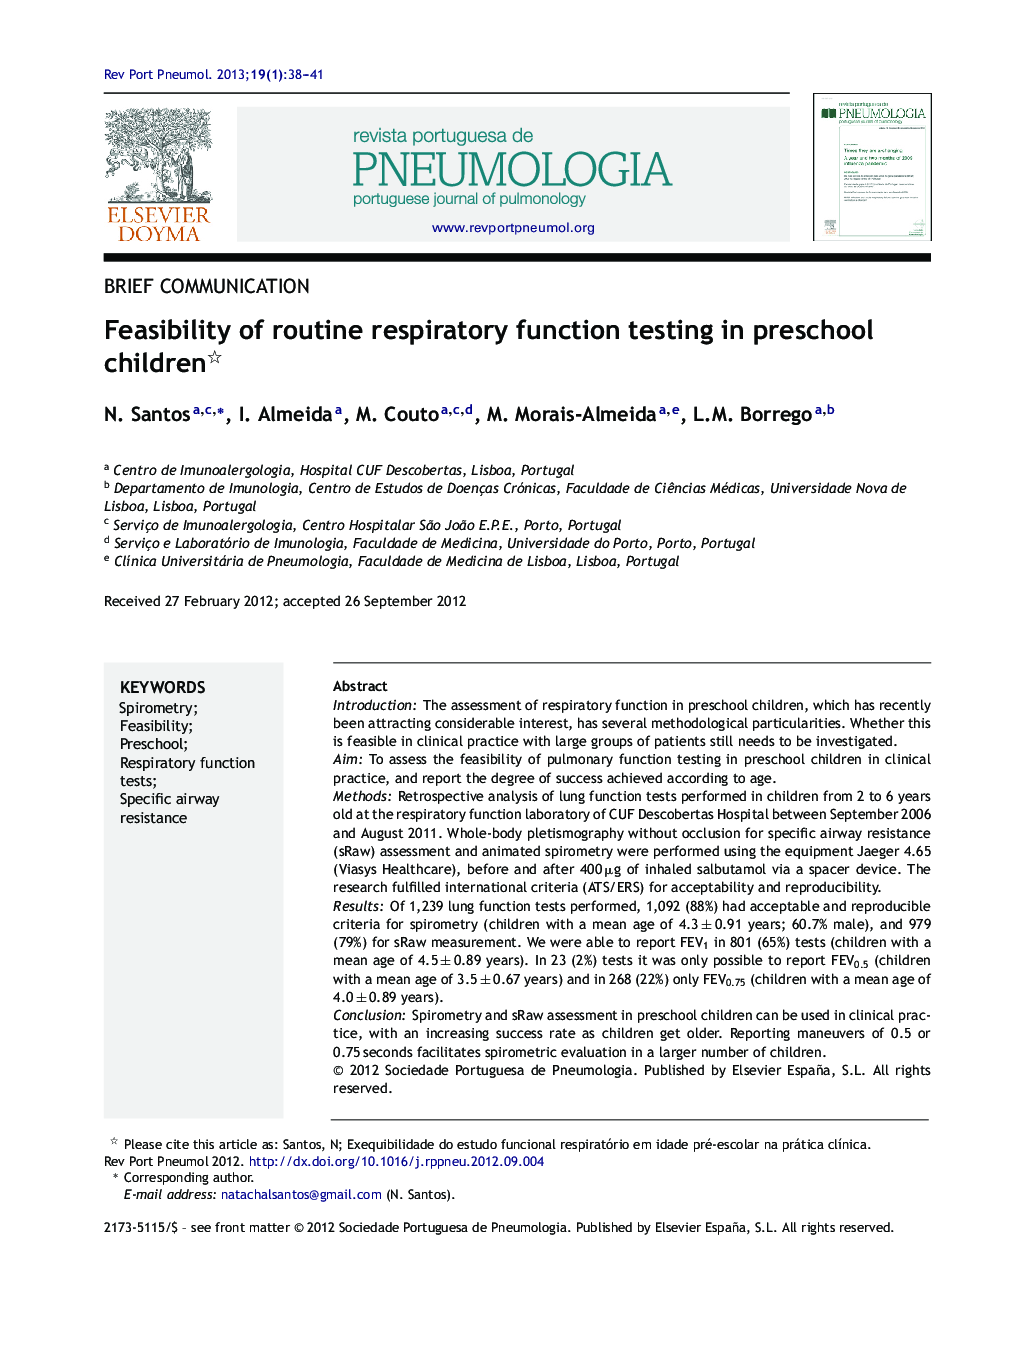 Feasibility of routine respiratory function testing in preschool children